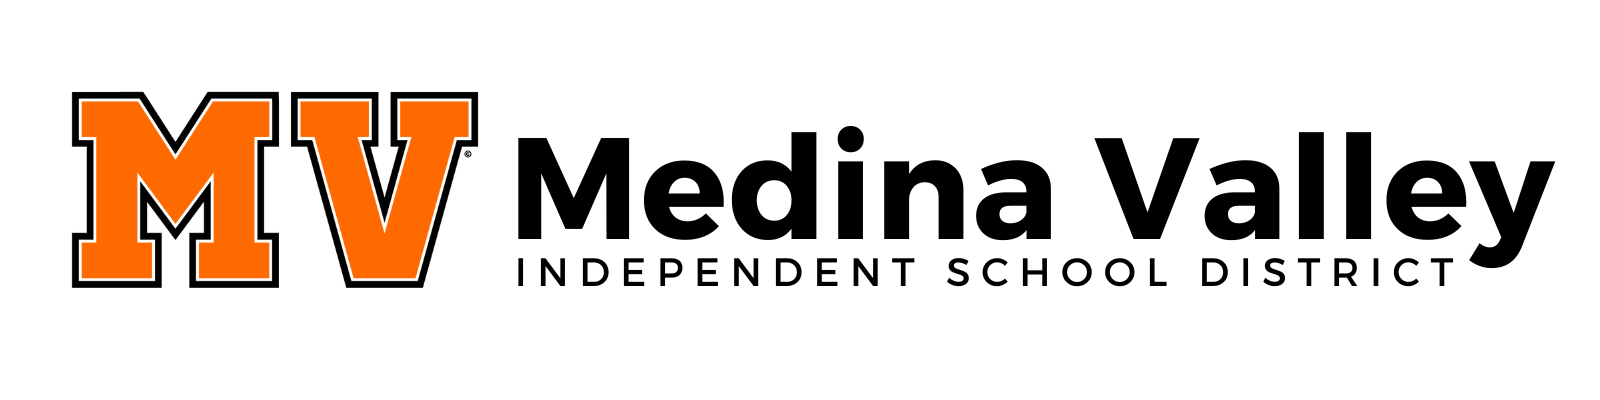 MEDINA VALLEY ISD Logo